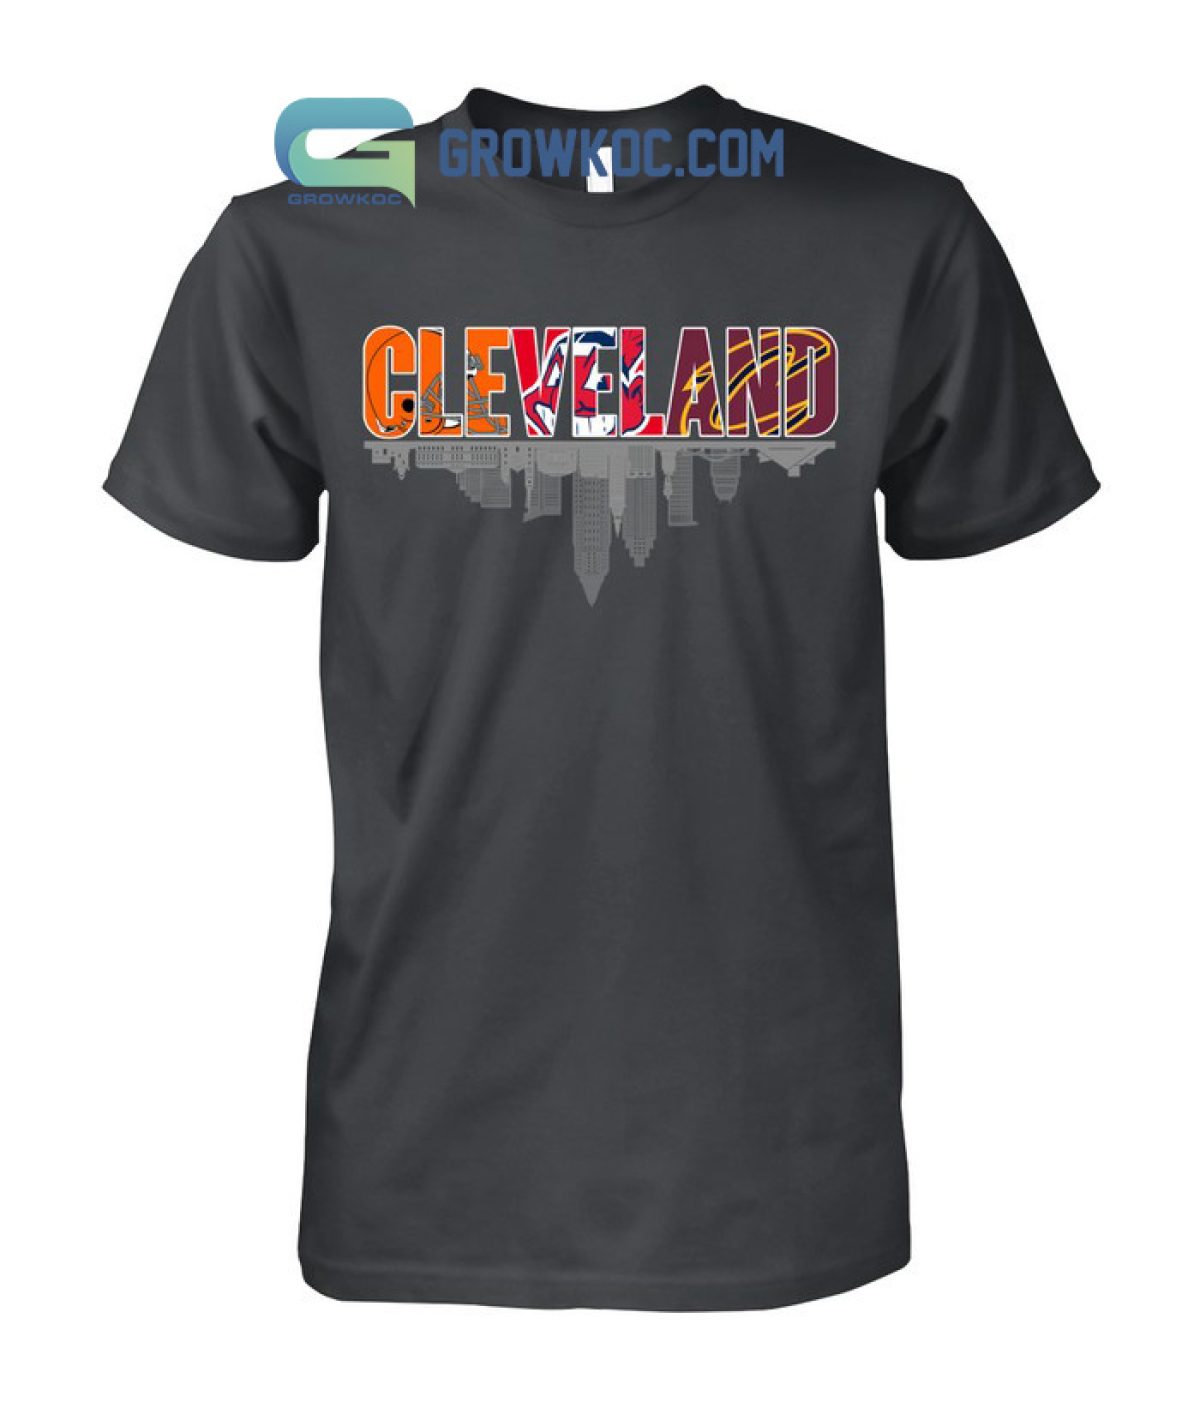 Gildan Cleveland Guardians MLB Shirts for sale